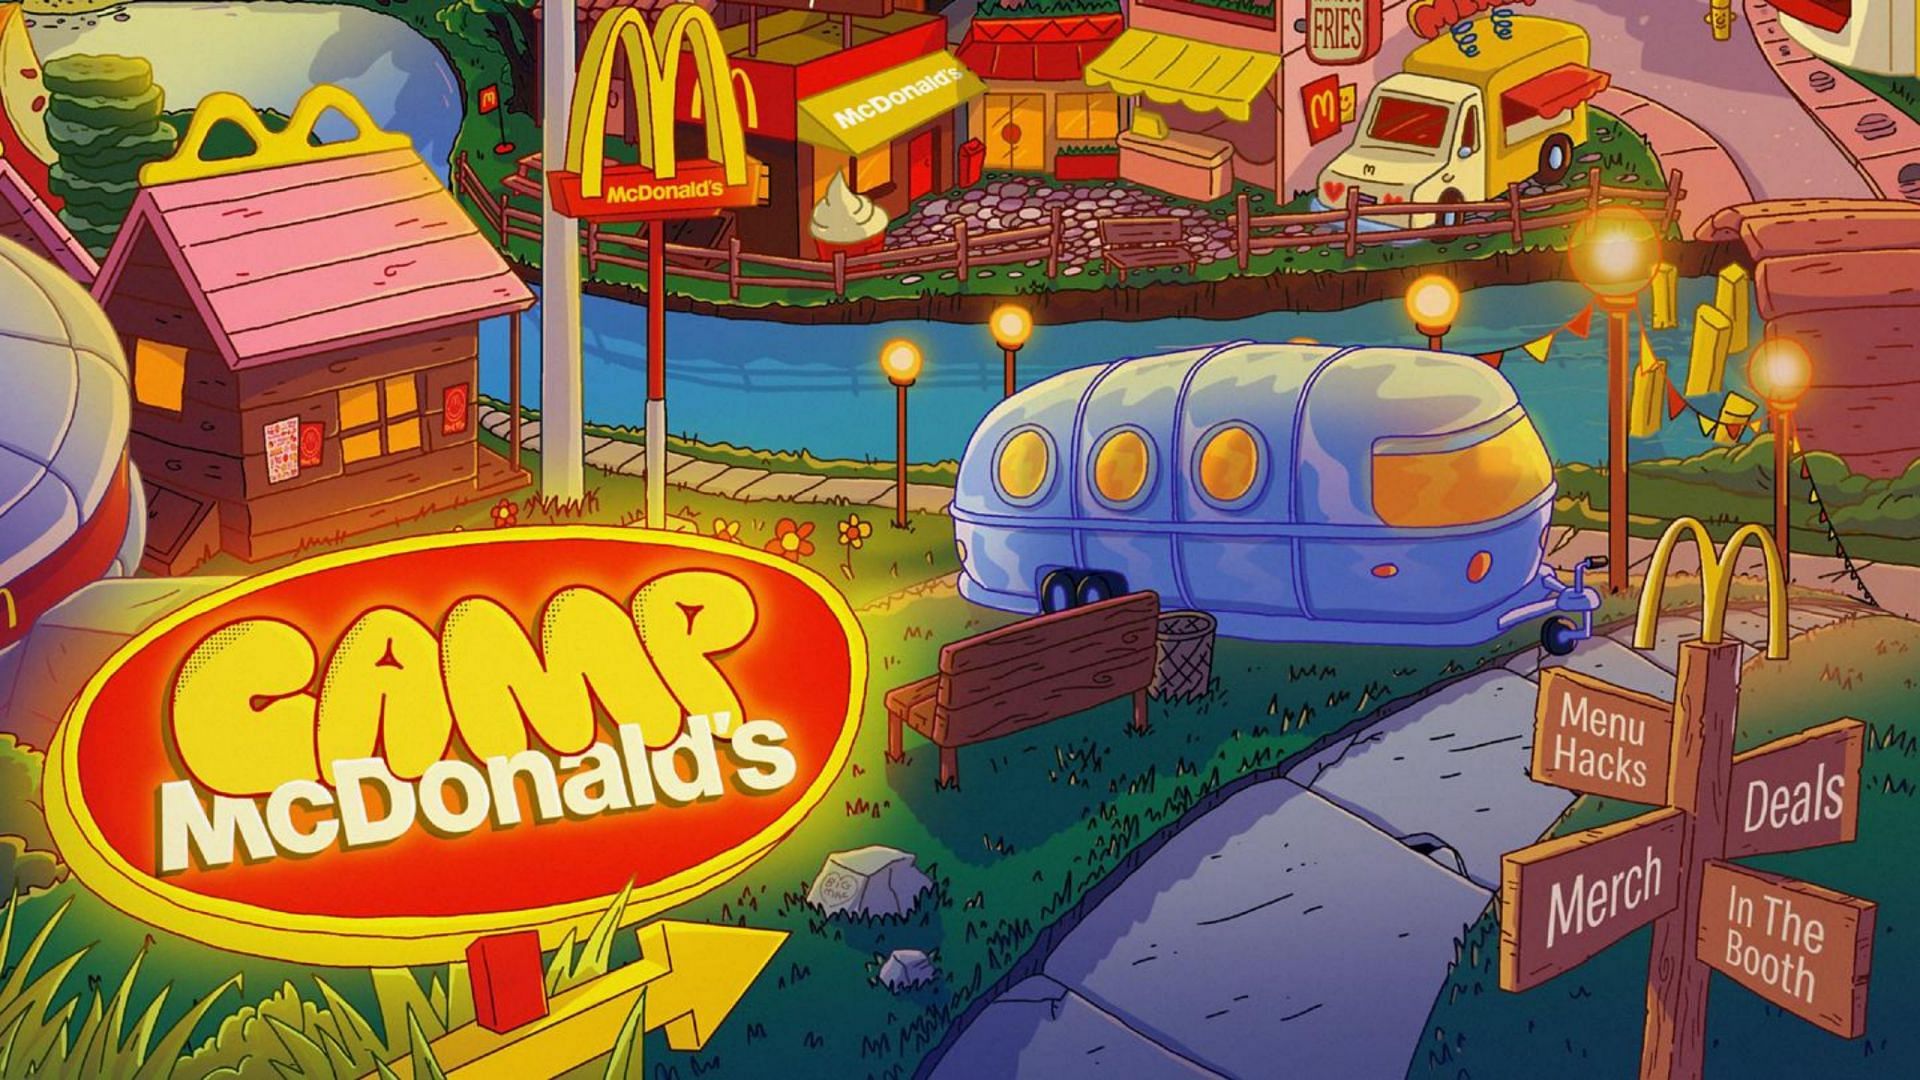 What is Camp McDonalds? Burger giant drops deals menu hacks and